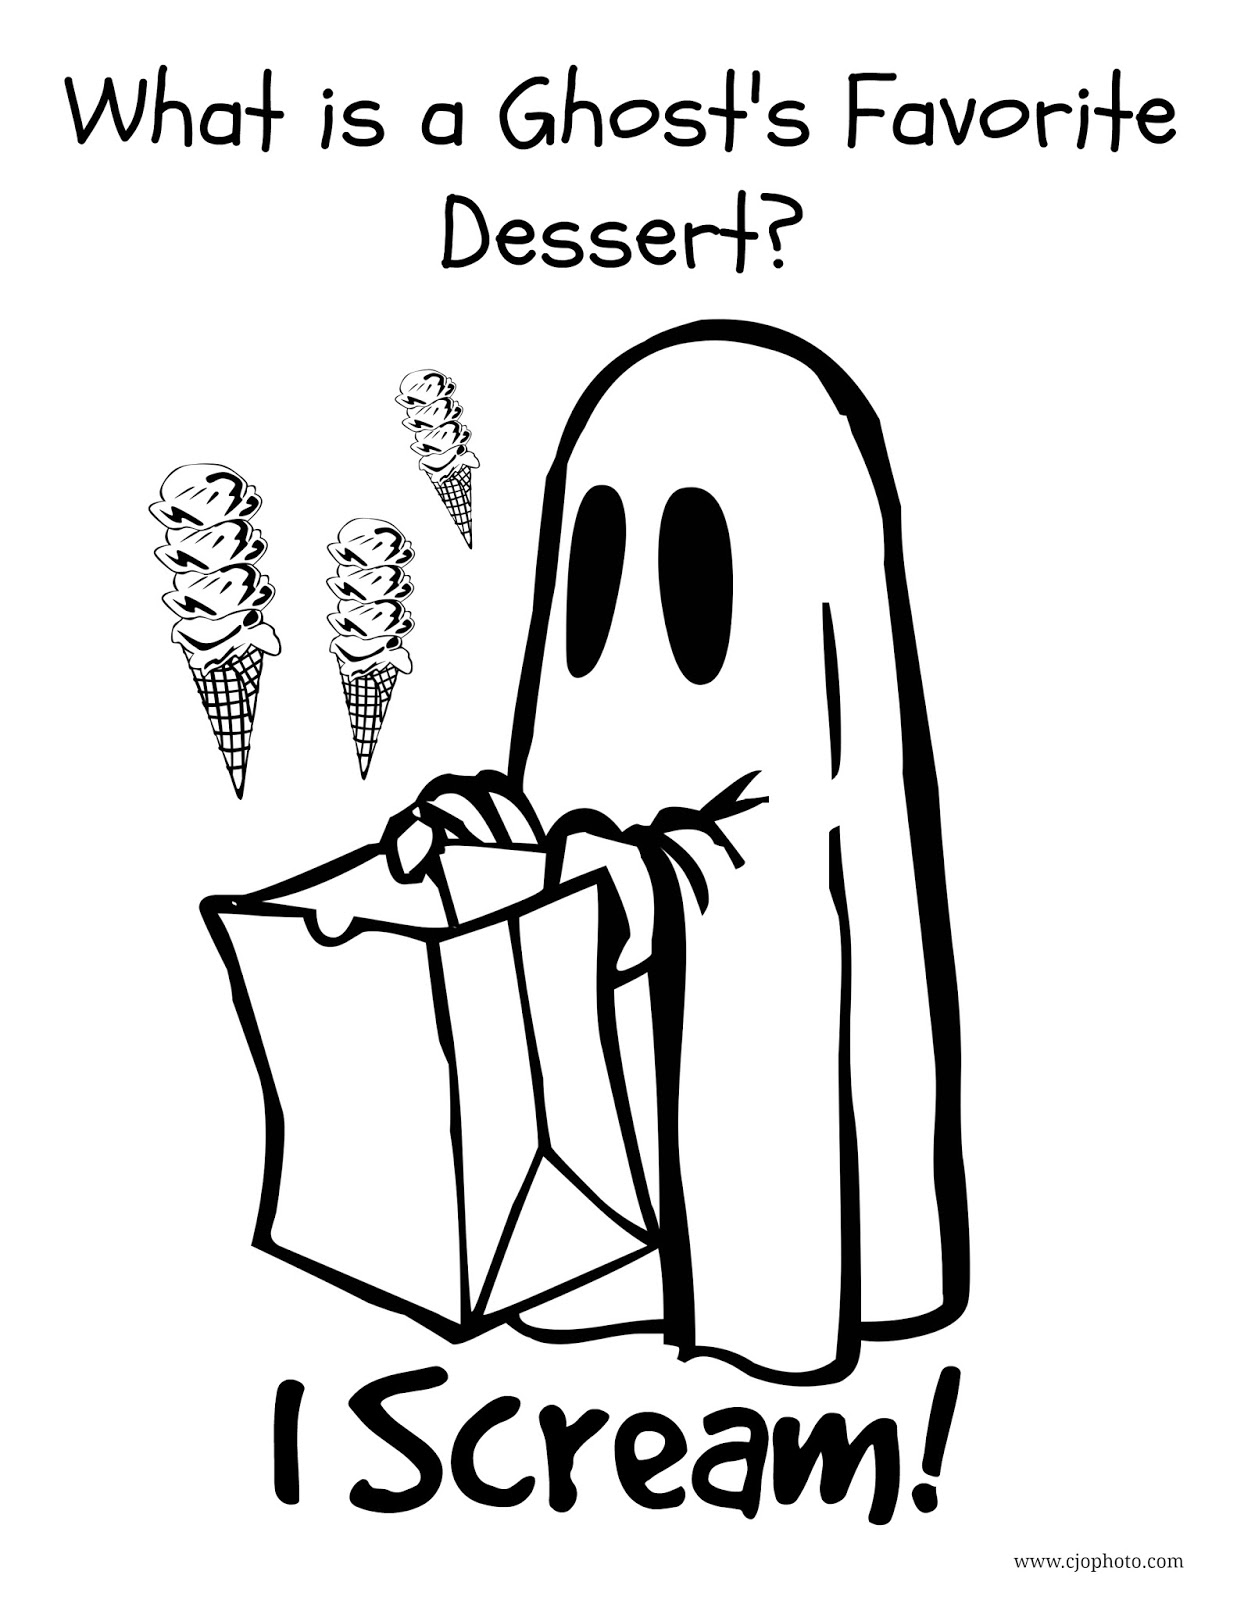 Download CJO Photo: Halloween Joke Coloring Page: Ghost Joke